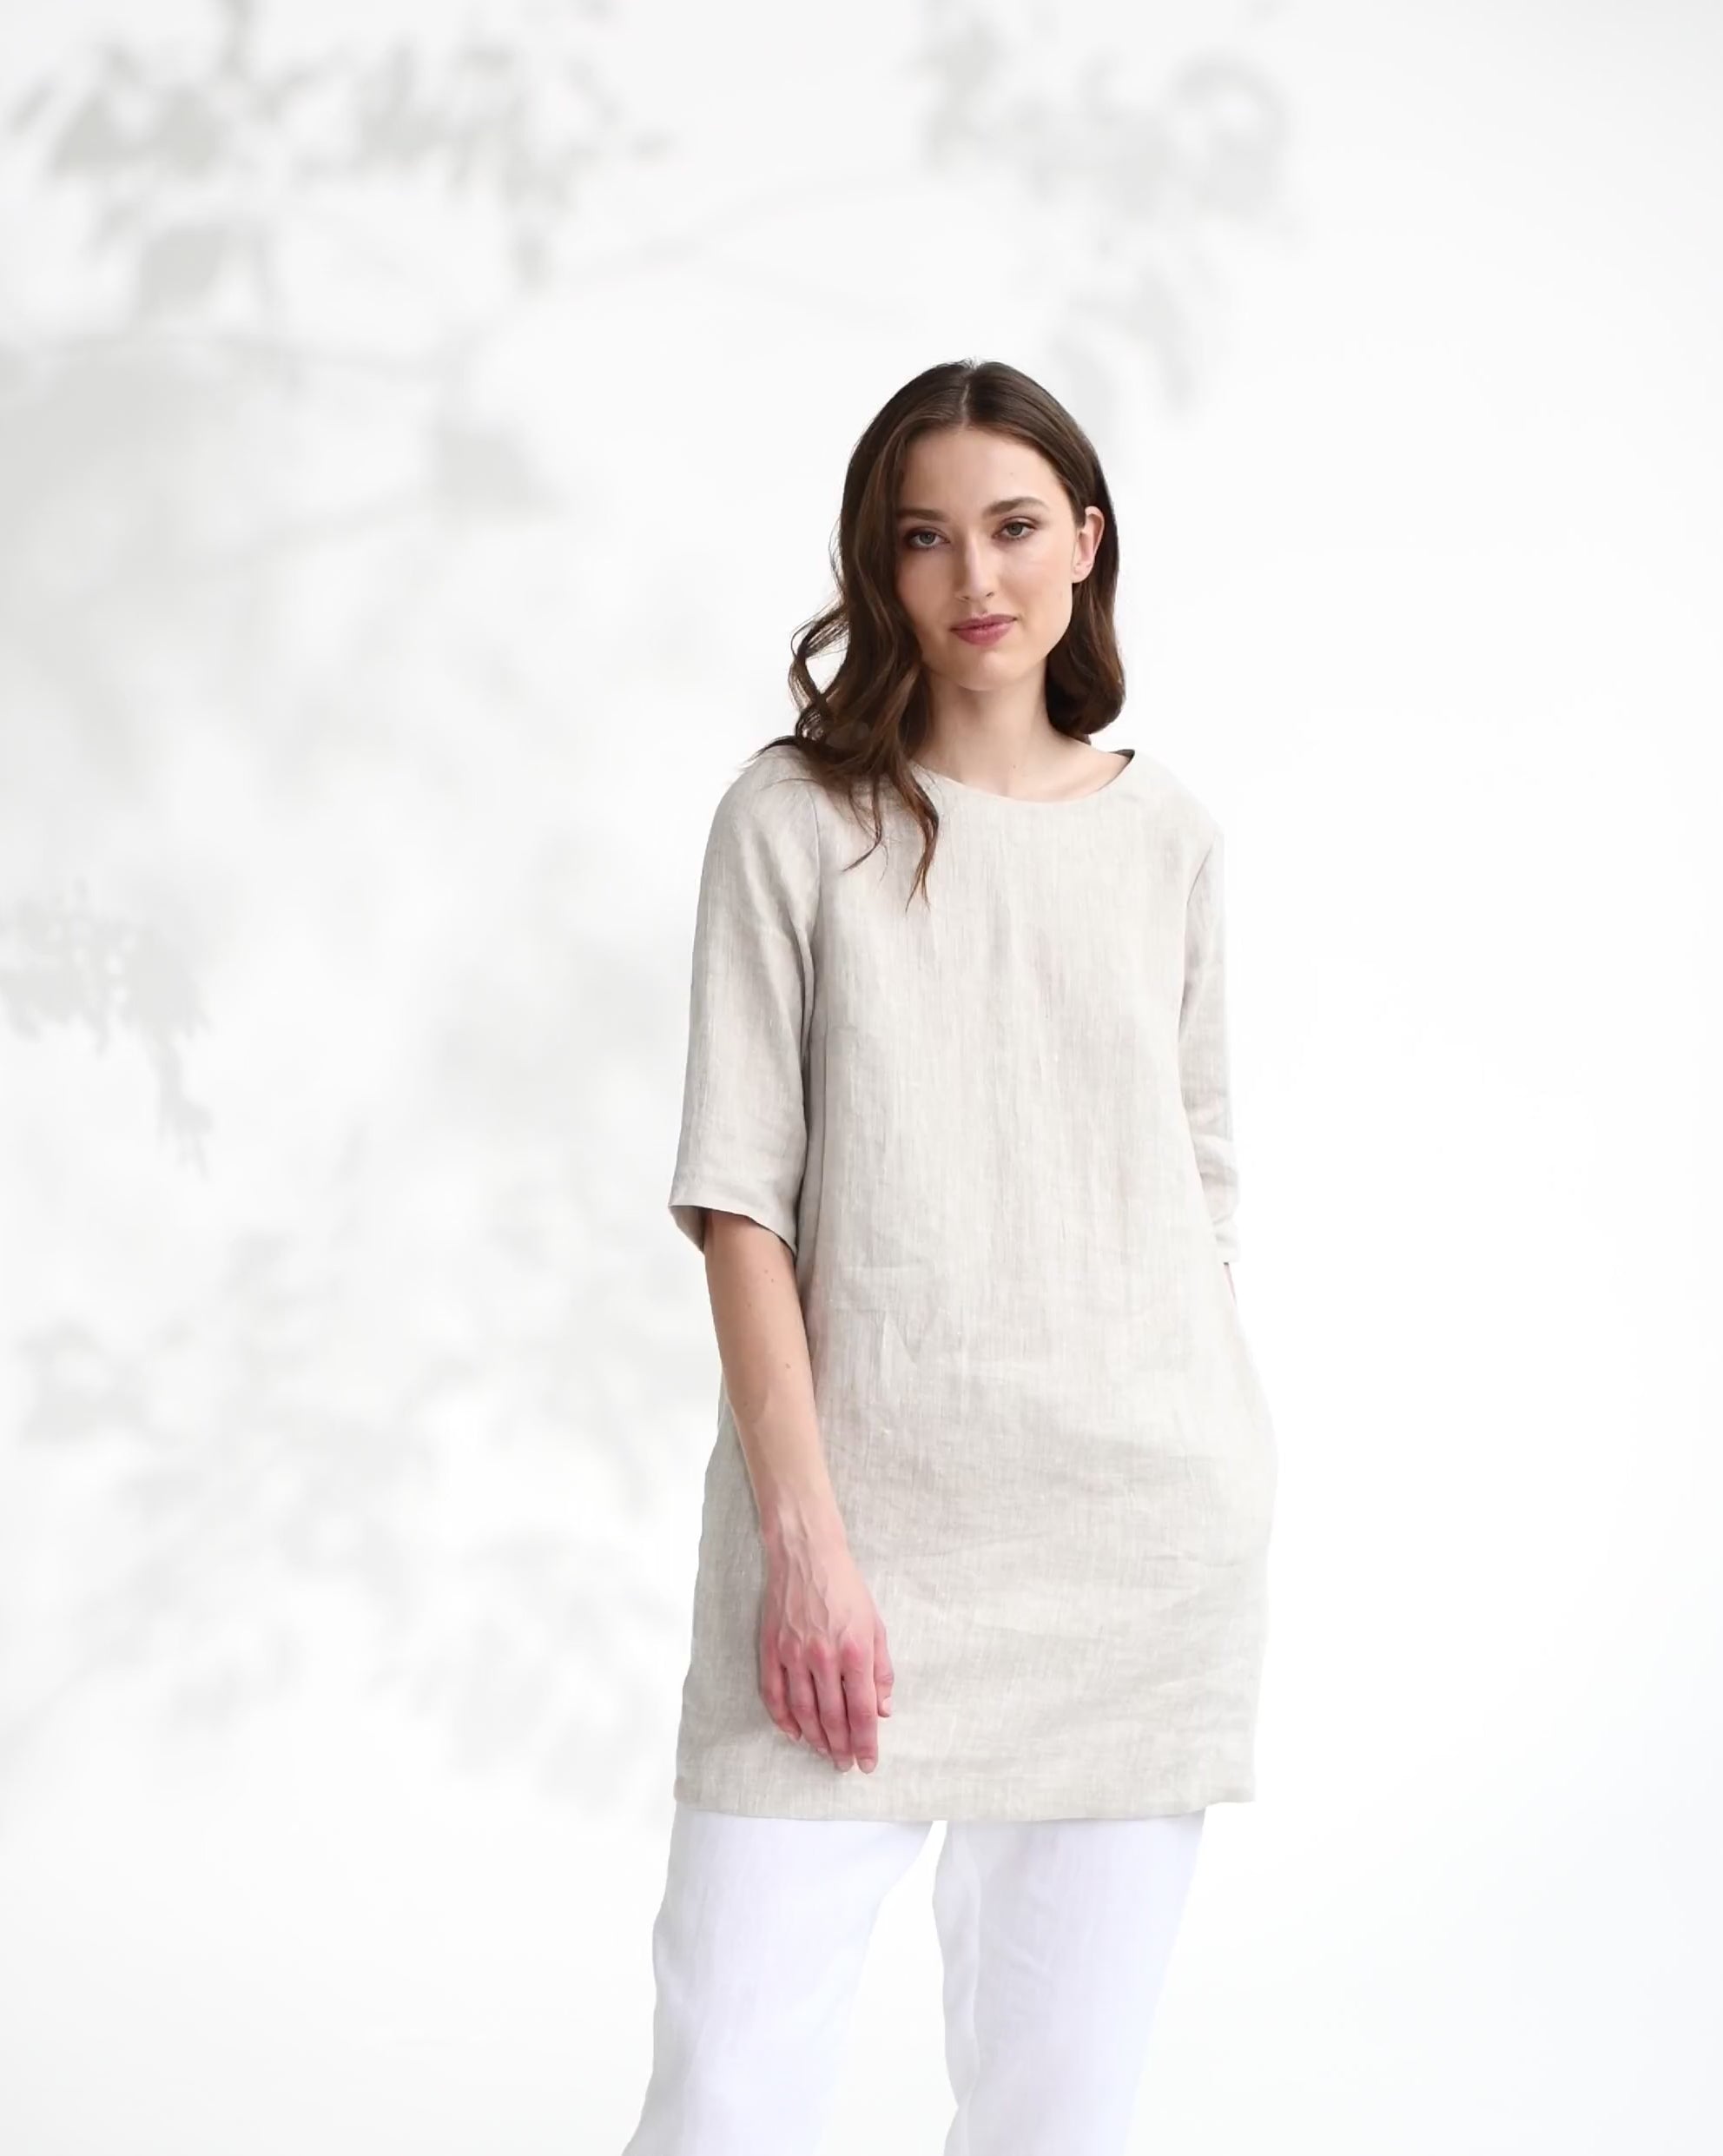 Linen tunic dress LASTRES in Natural melange - MagicLinen